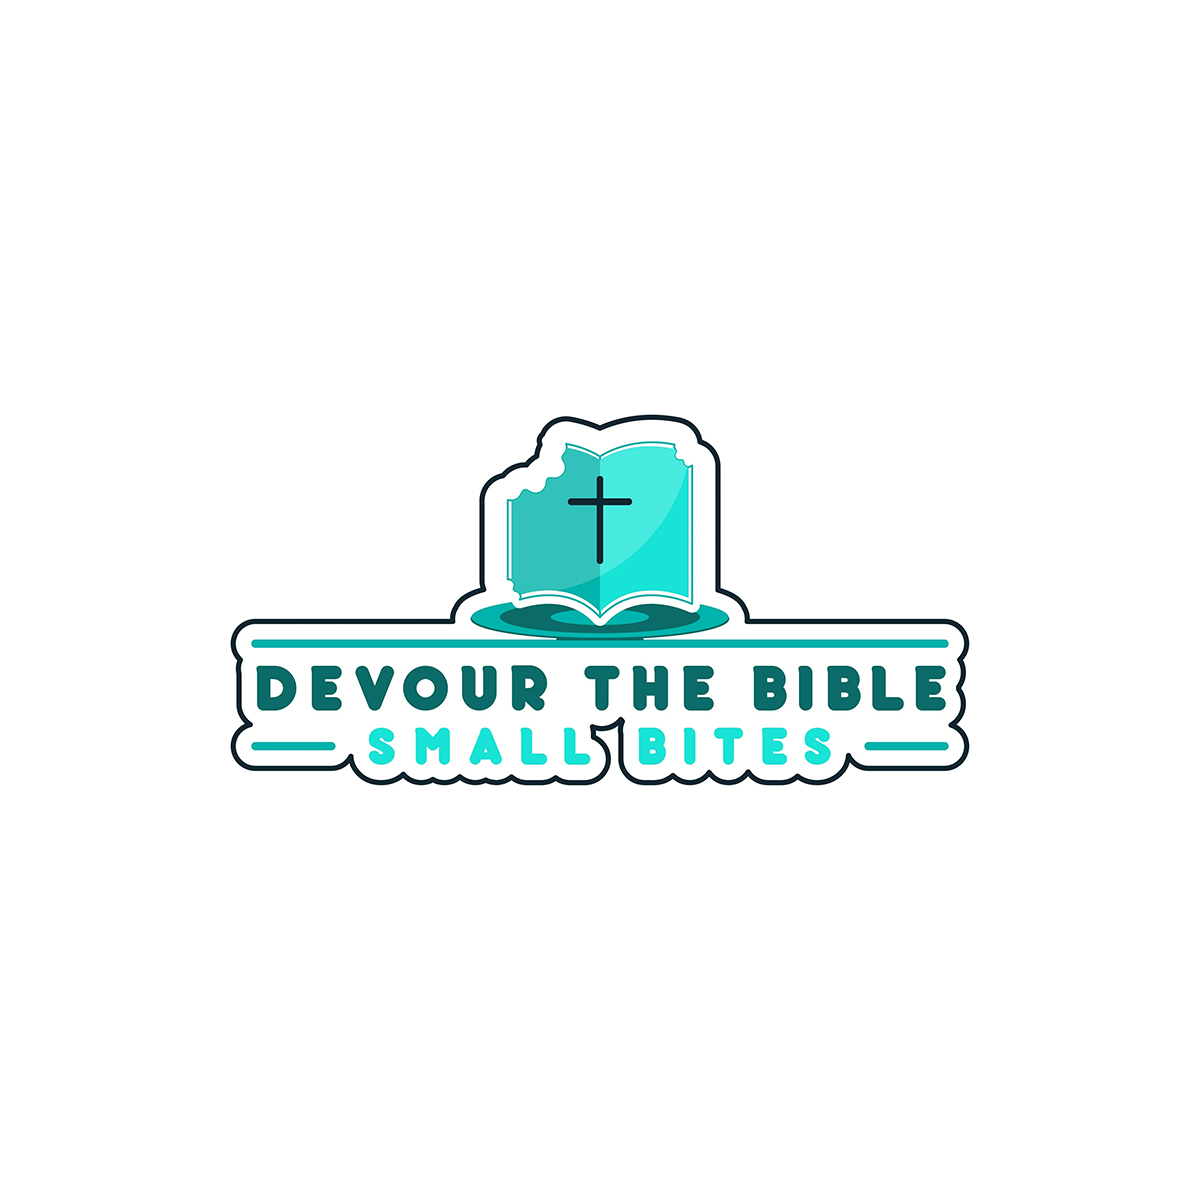 Devour the Bible: Small Bites